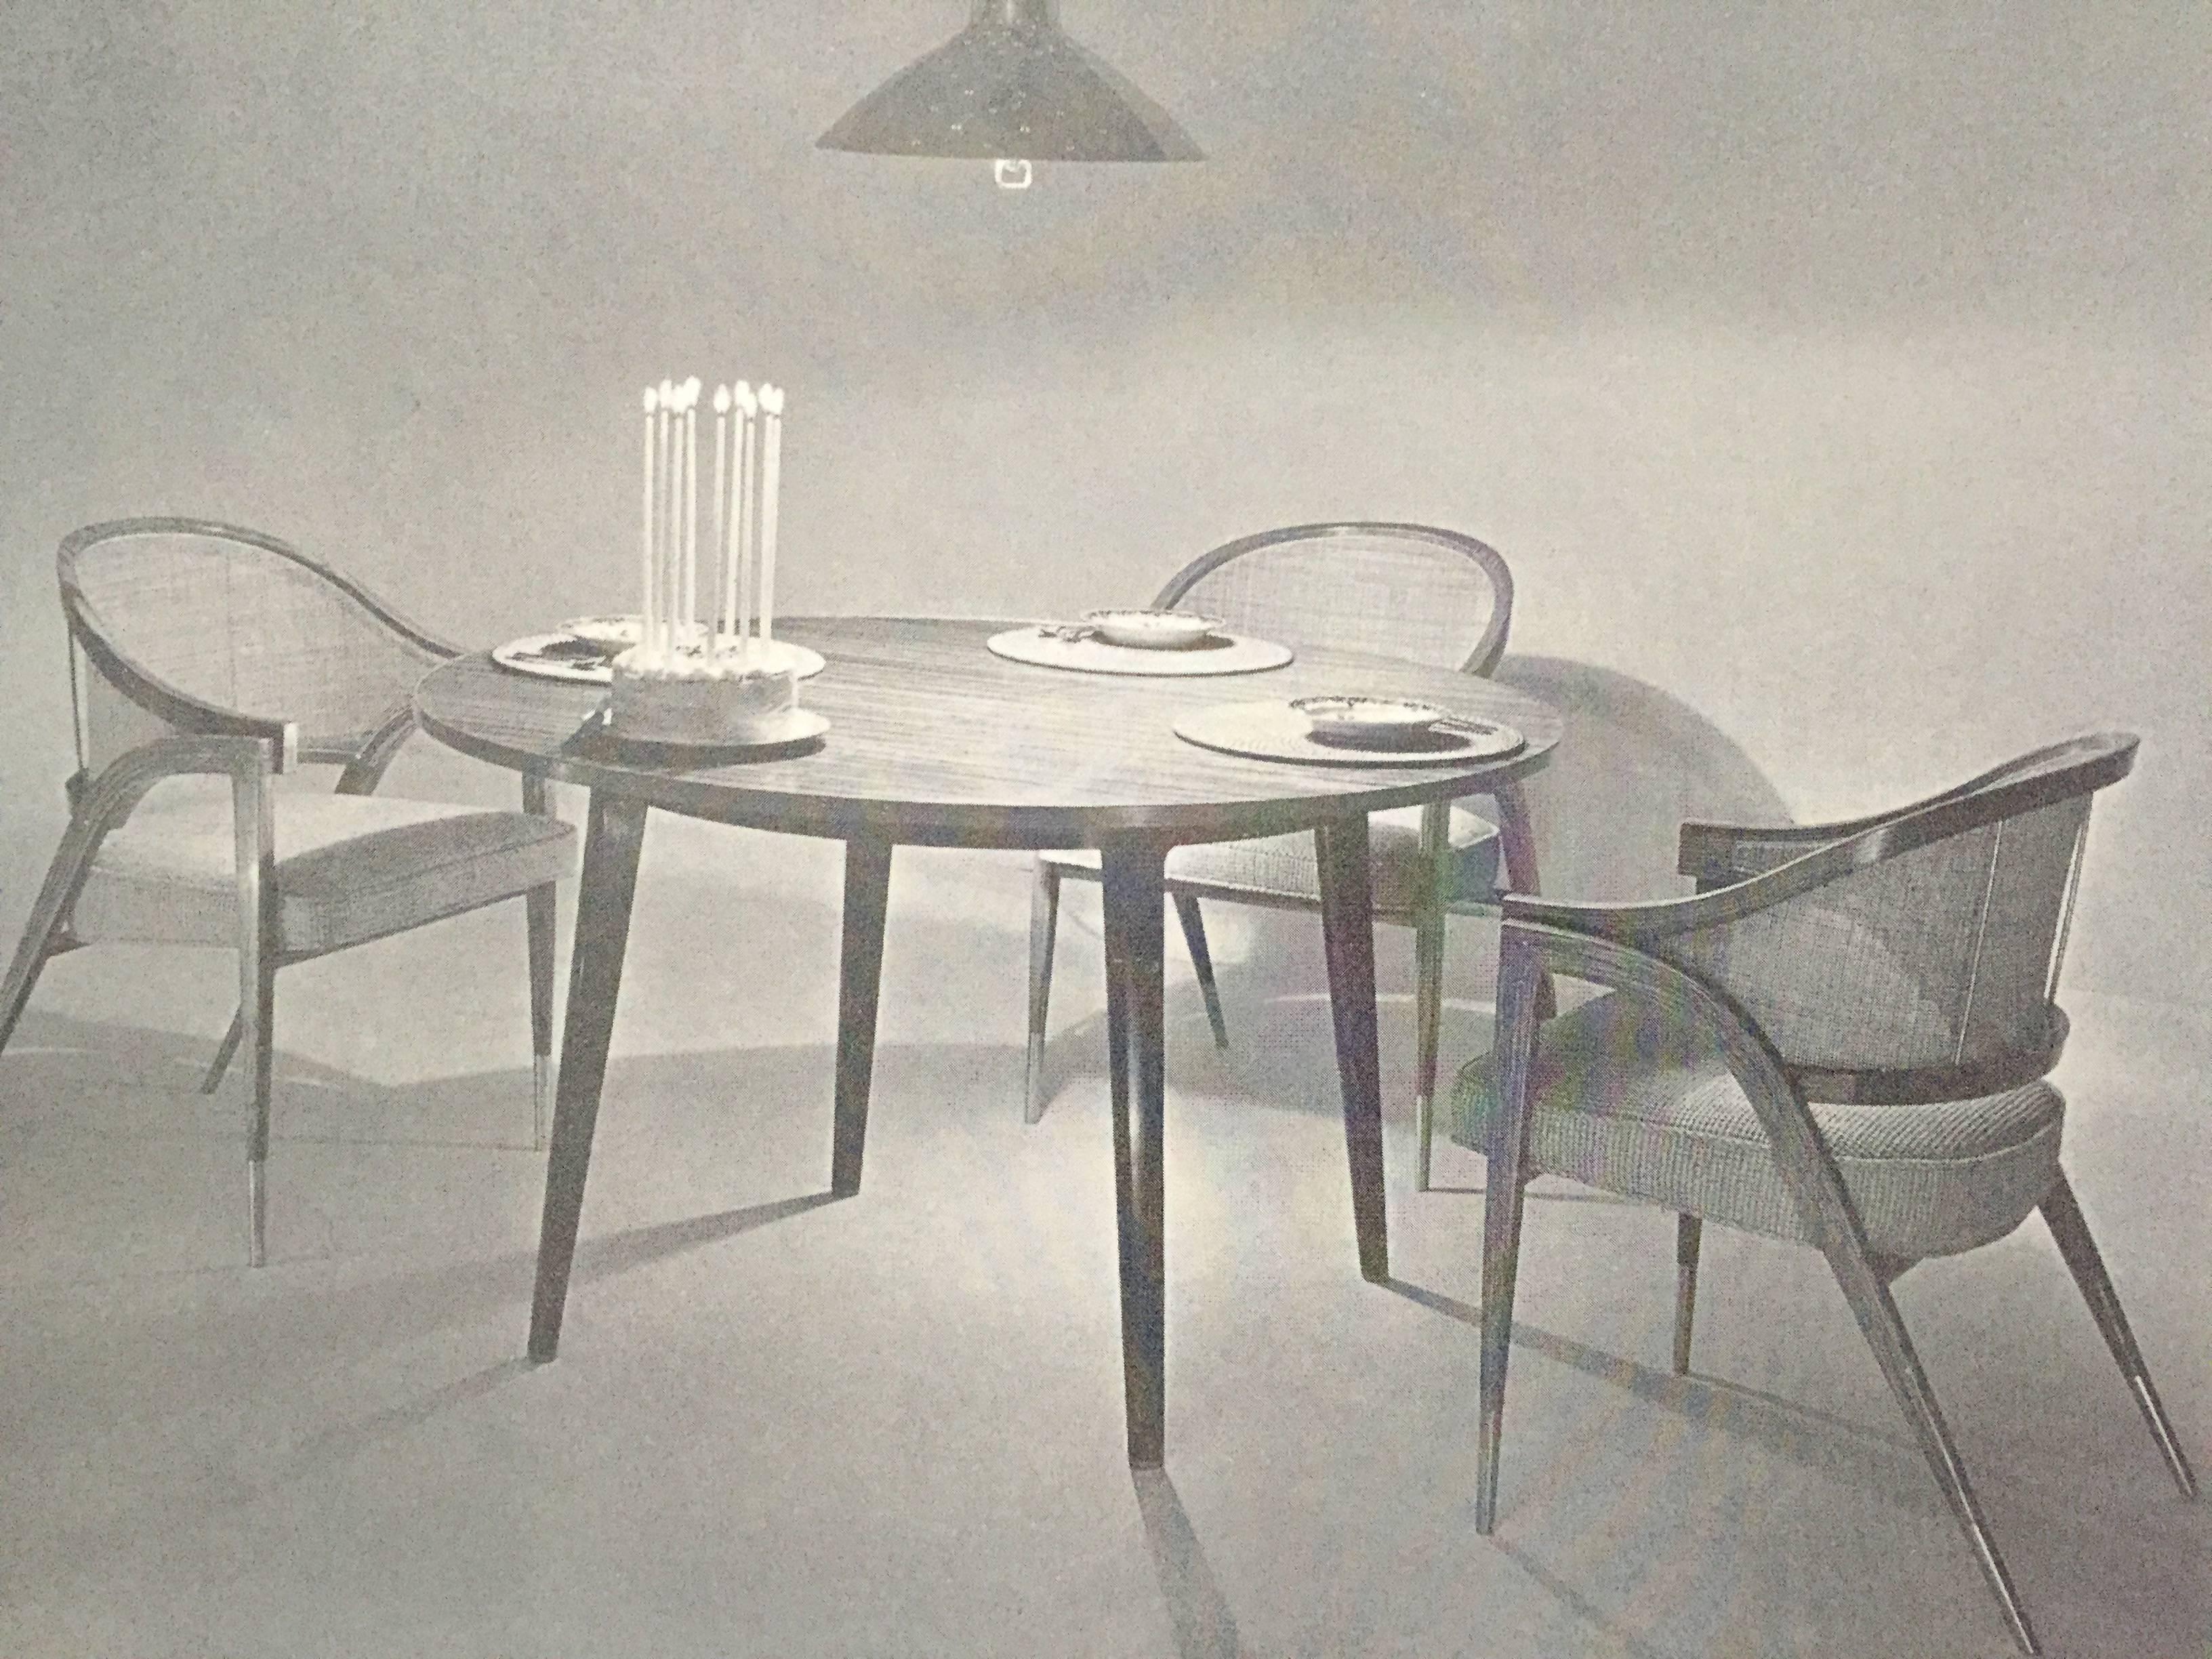 Contemporary Dunbar: Fine Furniture of the 1950s, Leslie Piña, Schiffer, 1st Edition, 2012